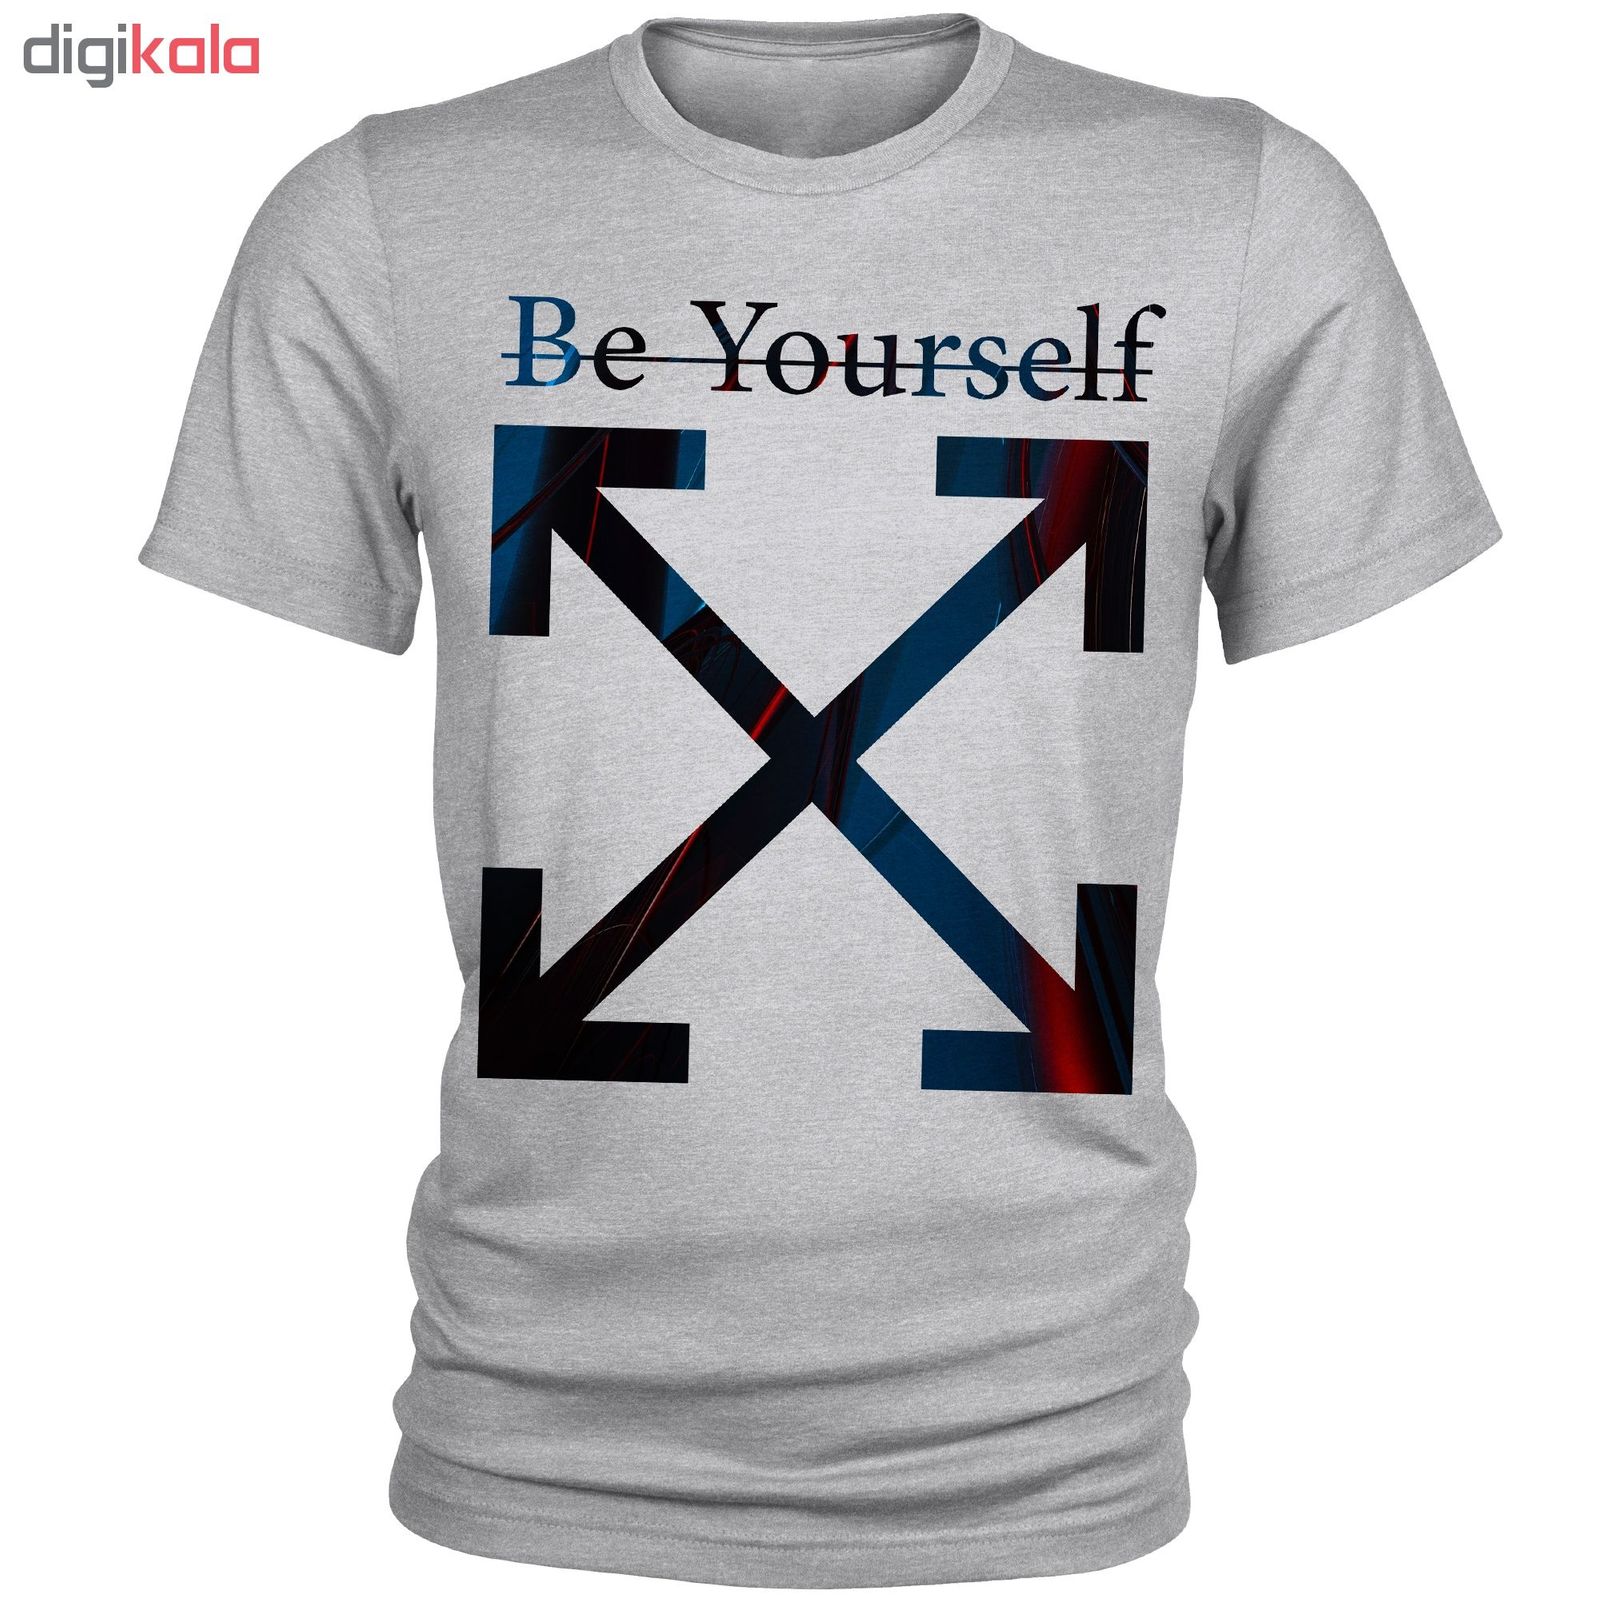 تی شرت مردانه طرح Be Yourself کد A060 